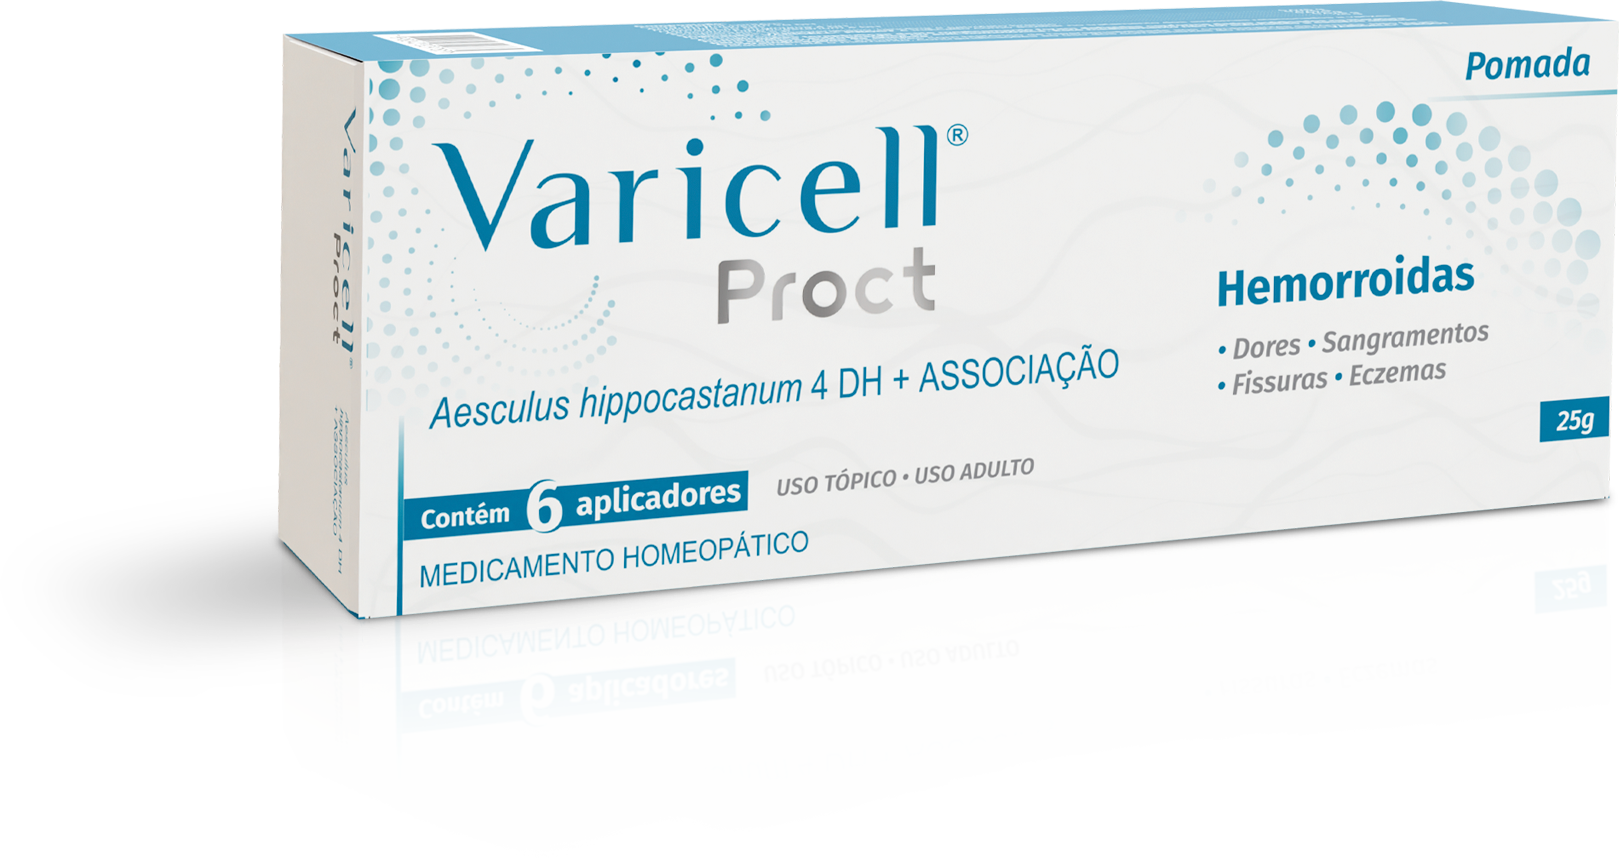 Varicell Proct